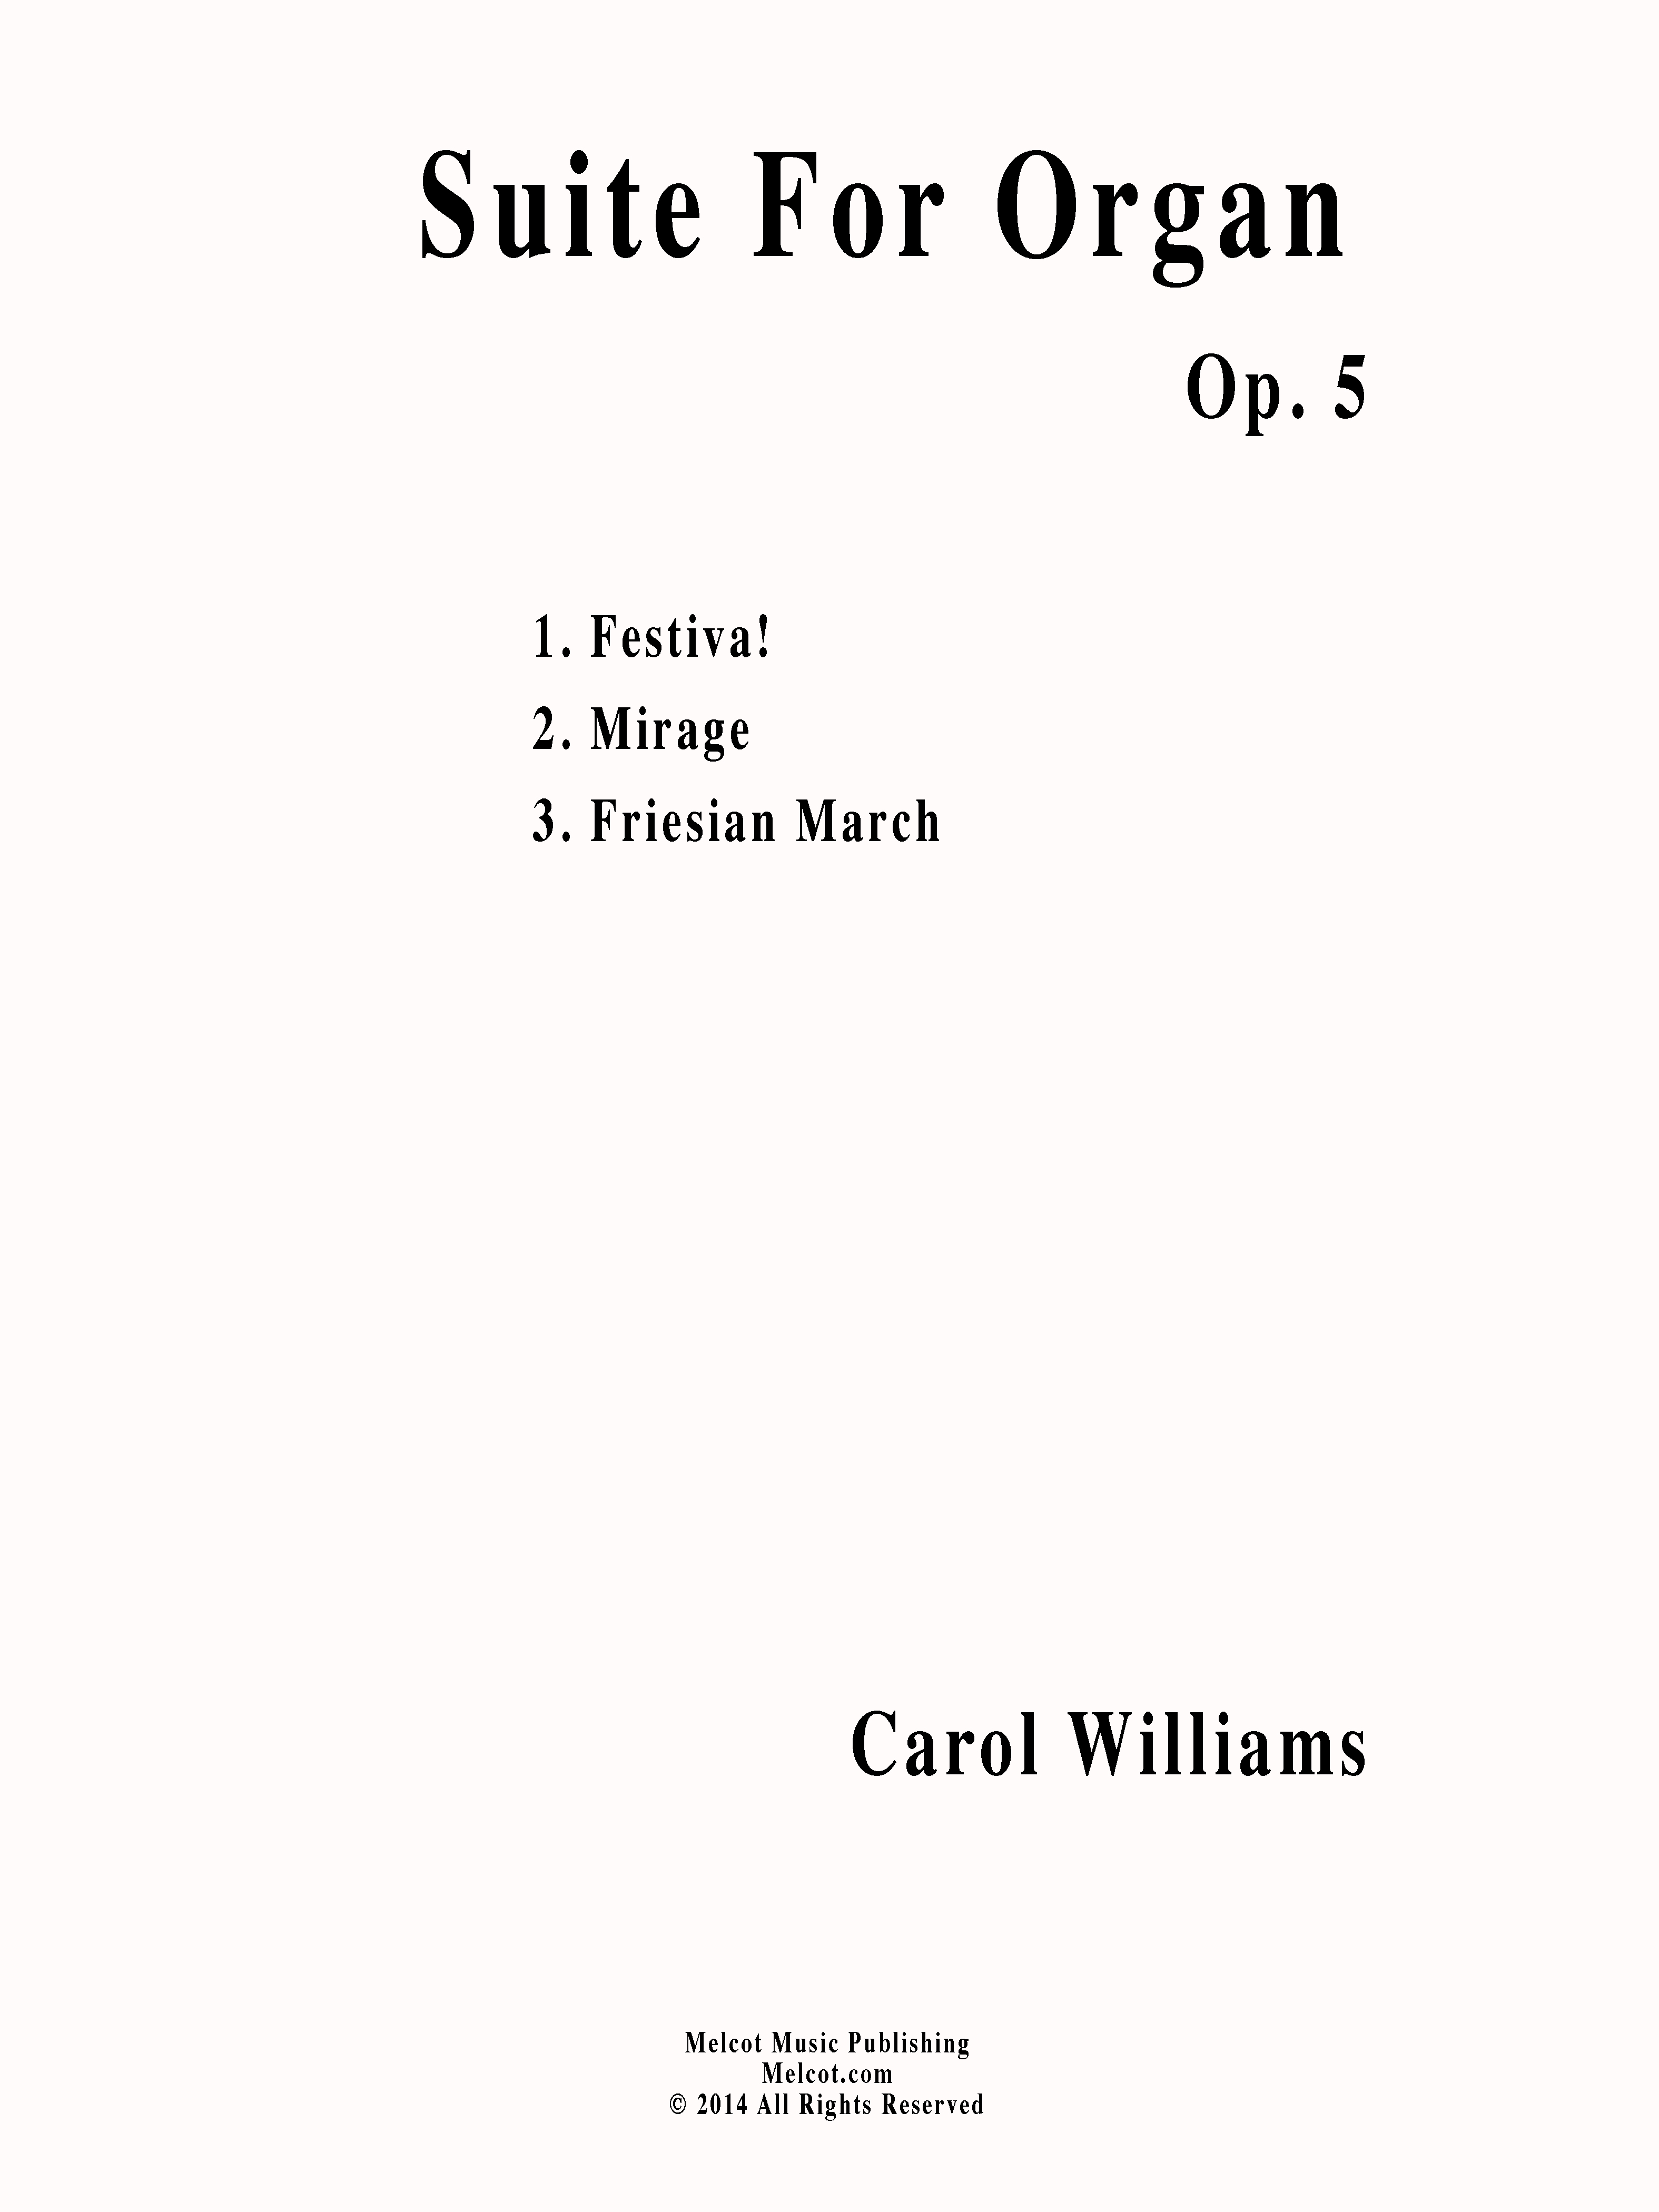 Suite for Organ by
                            Carol Williams